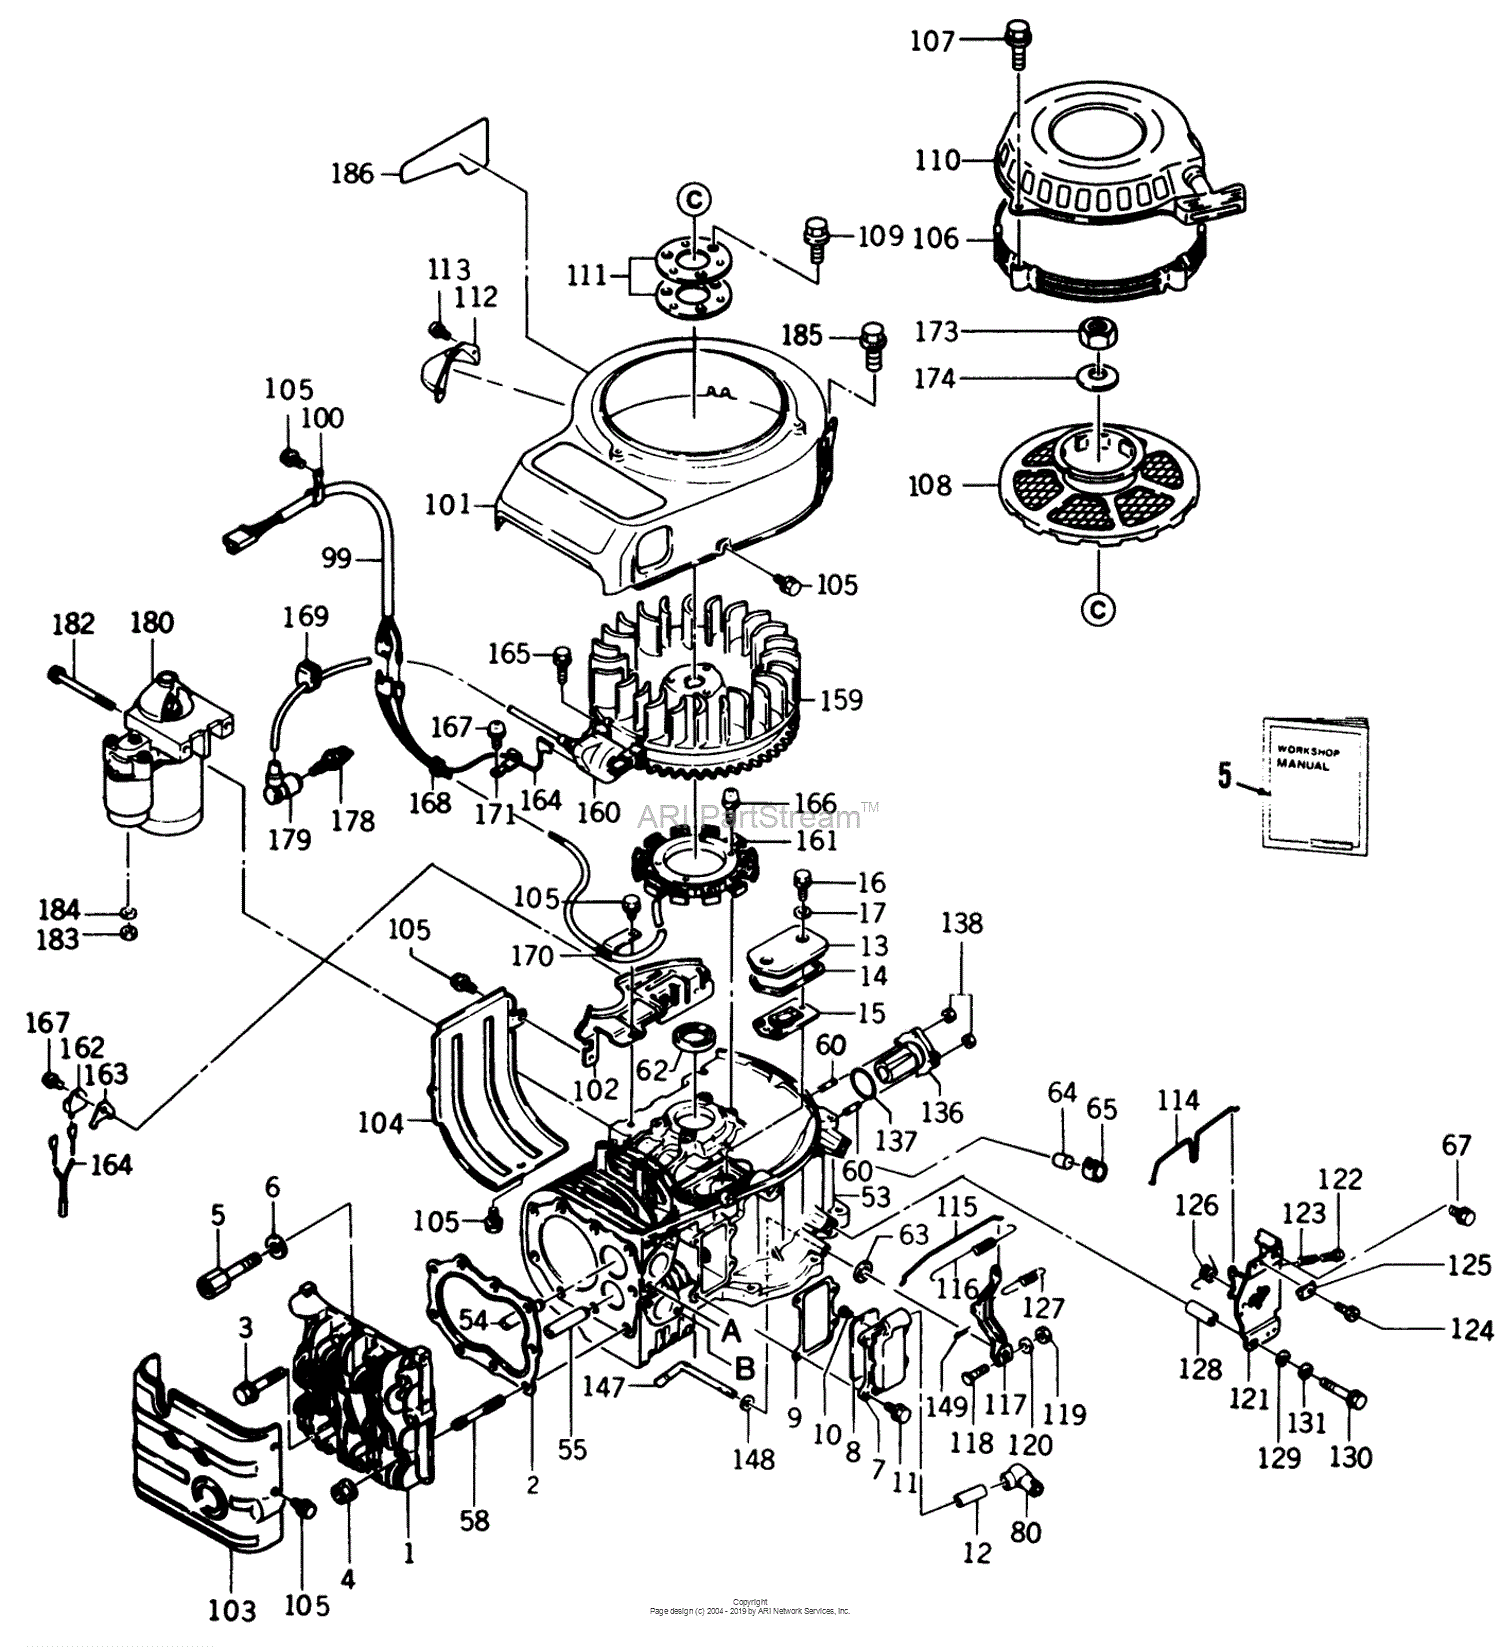 Toro B3-11B591, 111-5 Rear Engine Rider, 1987 Parts Diagram for ...